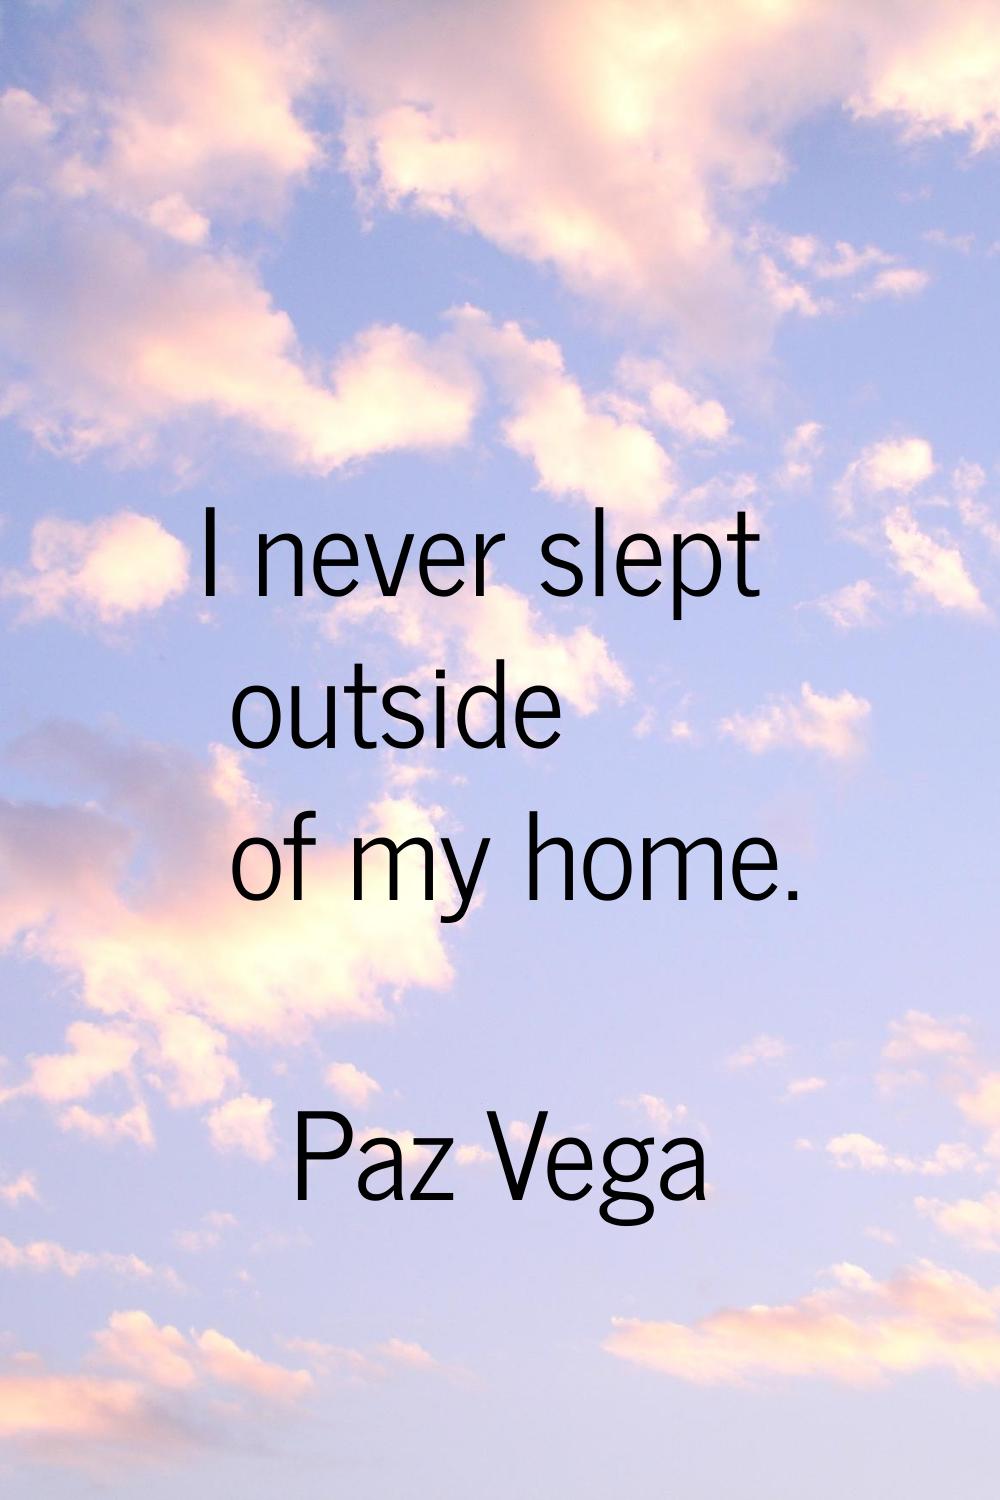 I never slept outside of my home.